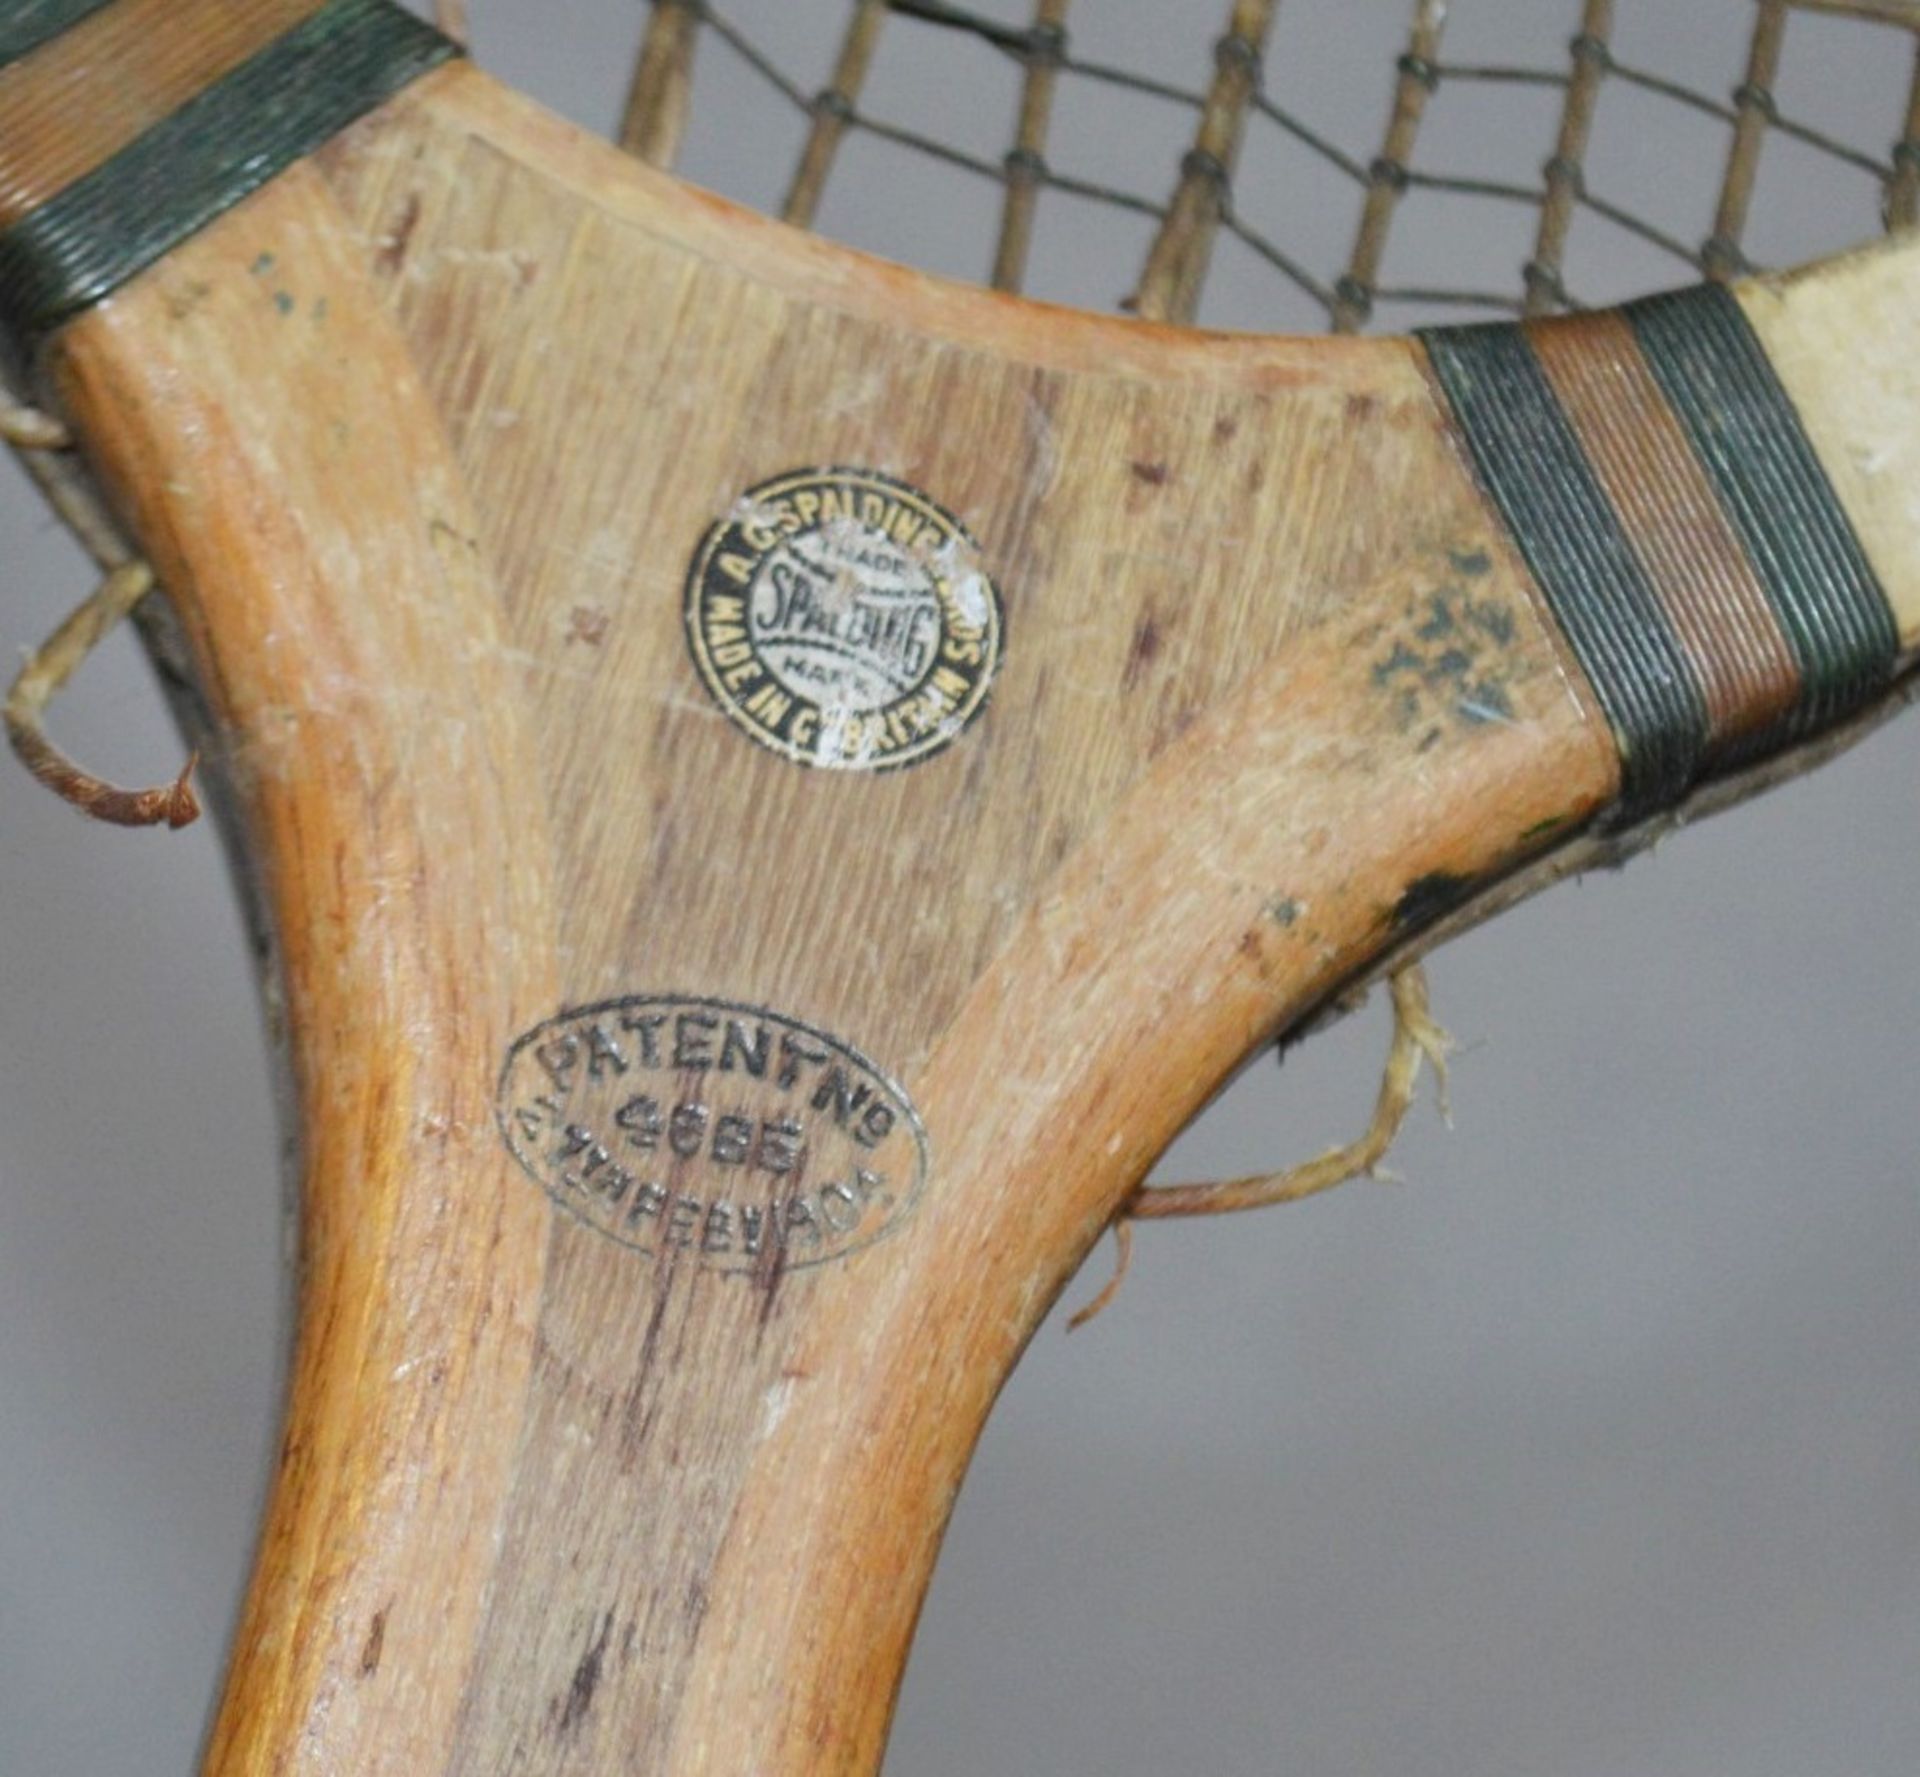 5 x Assorted Vintage Tennis Rackets - Ex-Display Props - Average Length: 69cm - Ref: HAR243 GIT - - Image 10 of 12